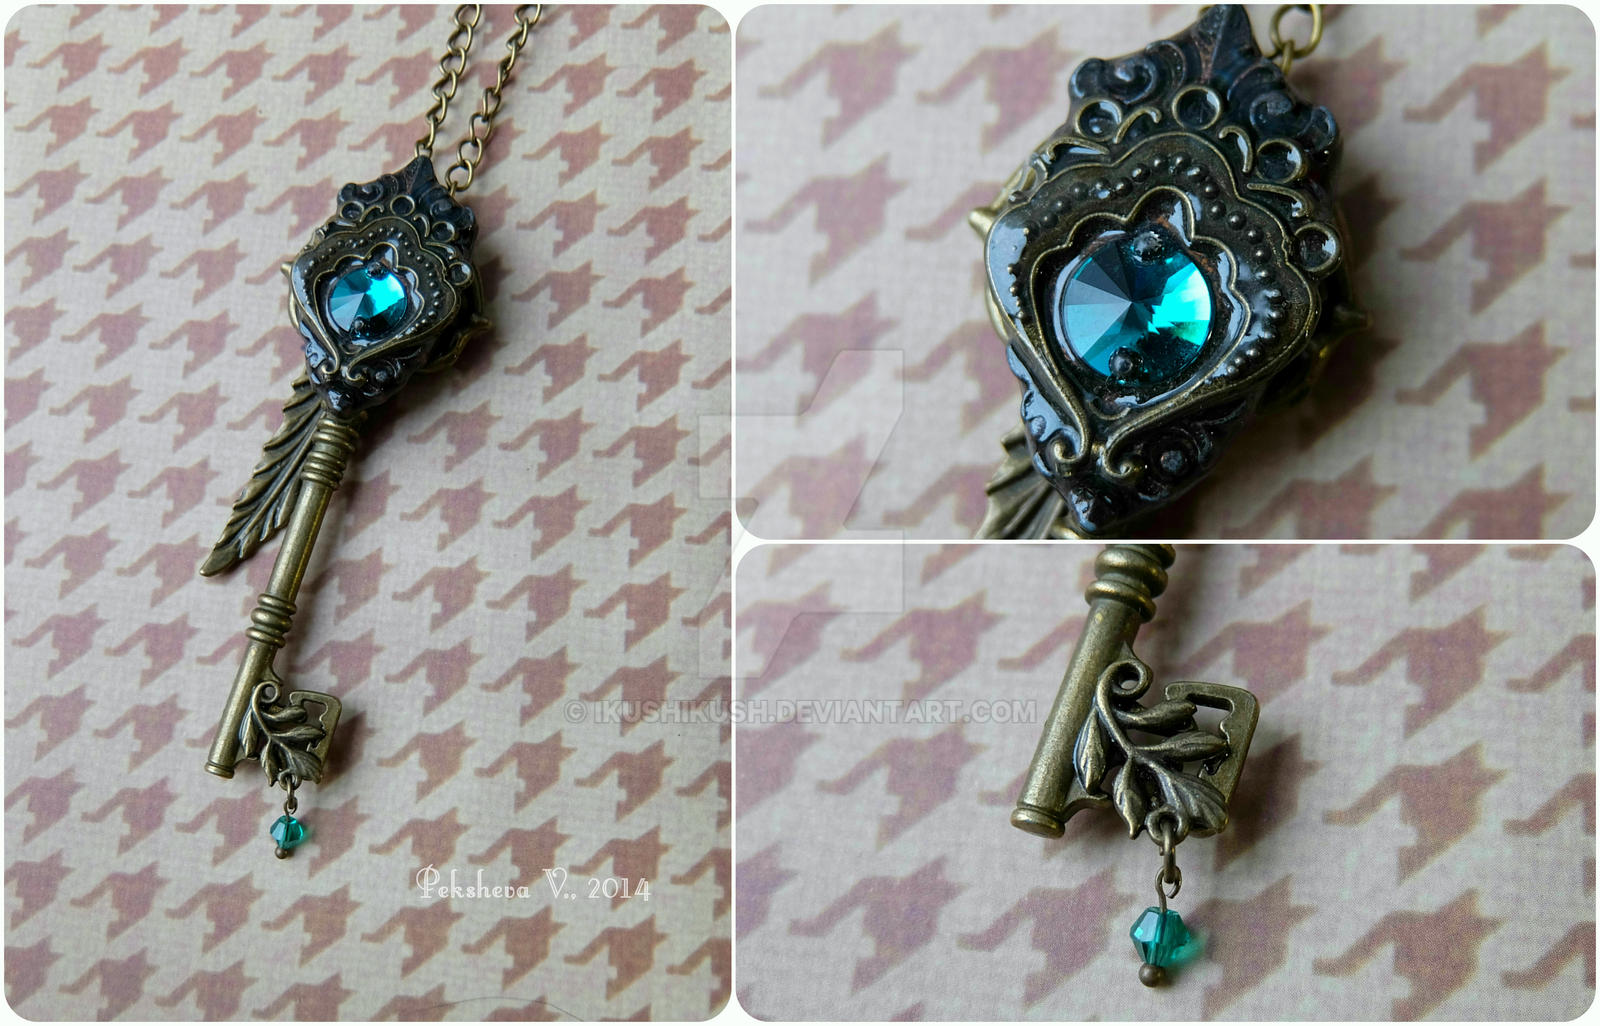 Emerald key pendant with Swarowski crystal